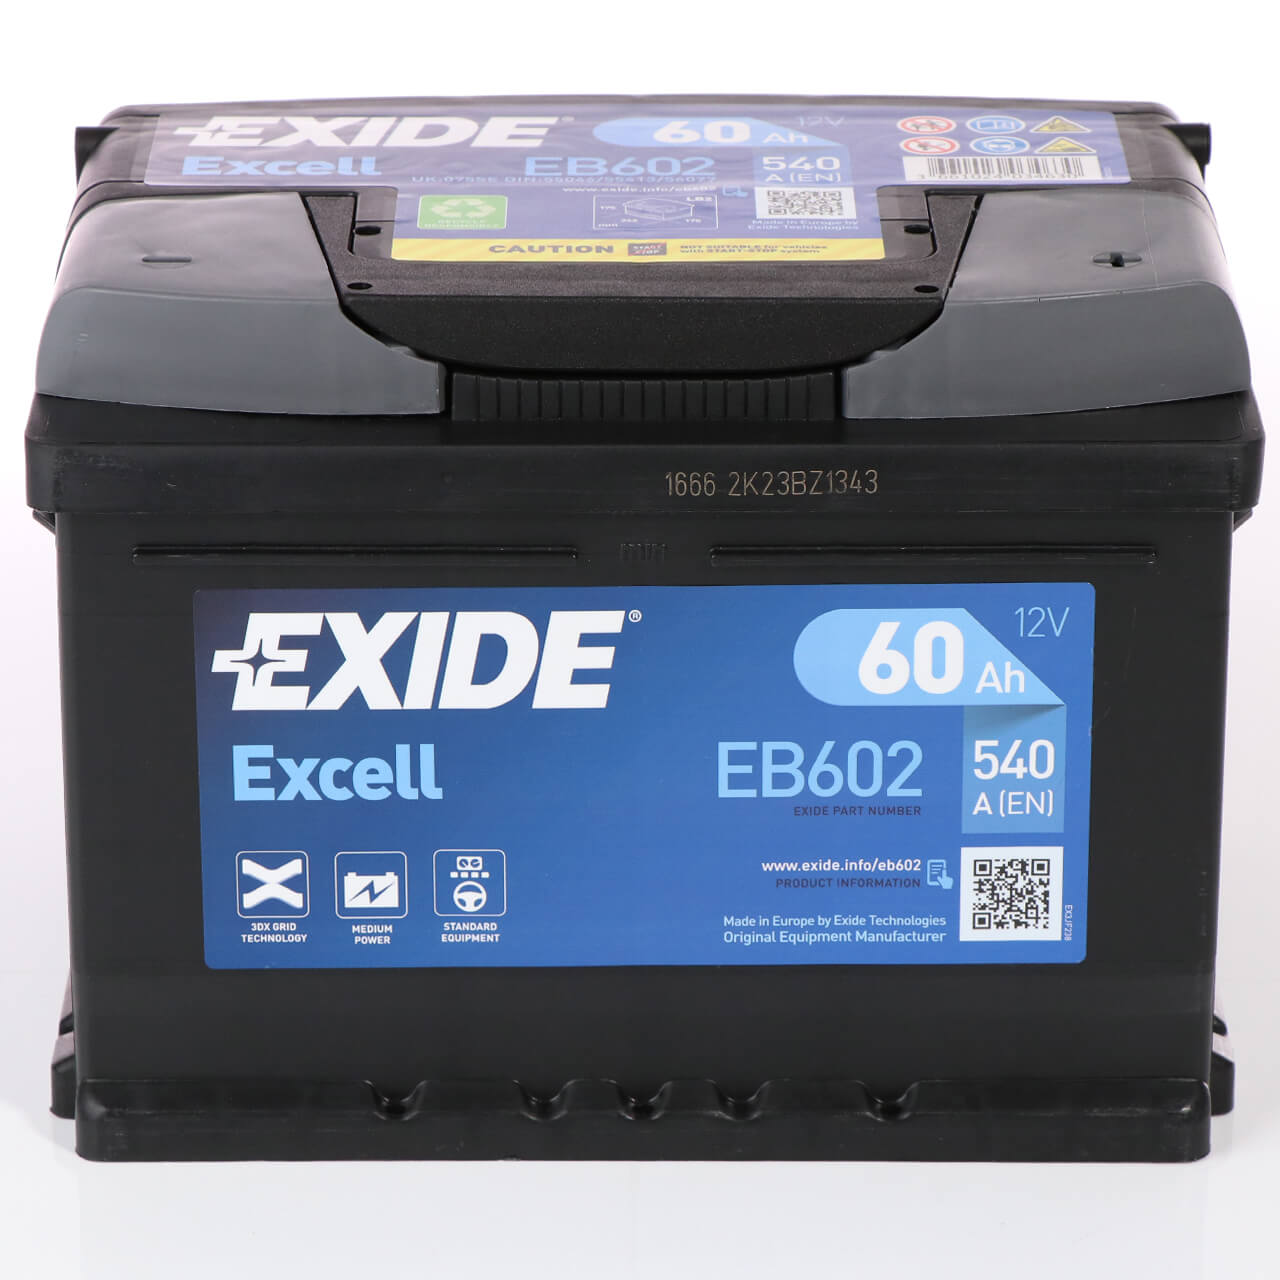 Battery Shop EXIDE EXCELL D23 EB605 12V 60Ah 480A